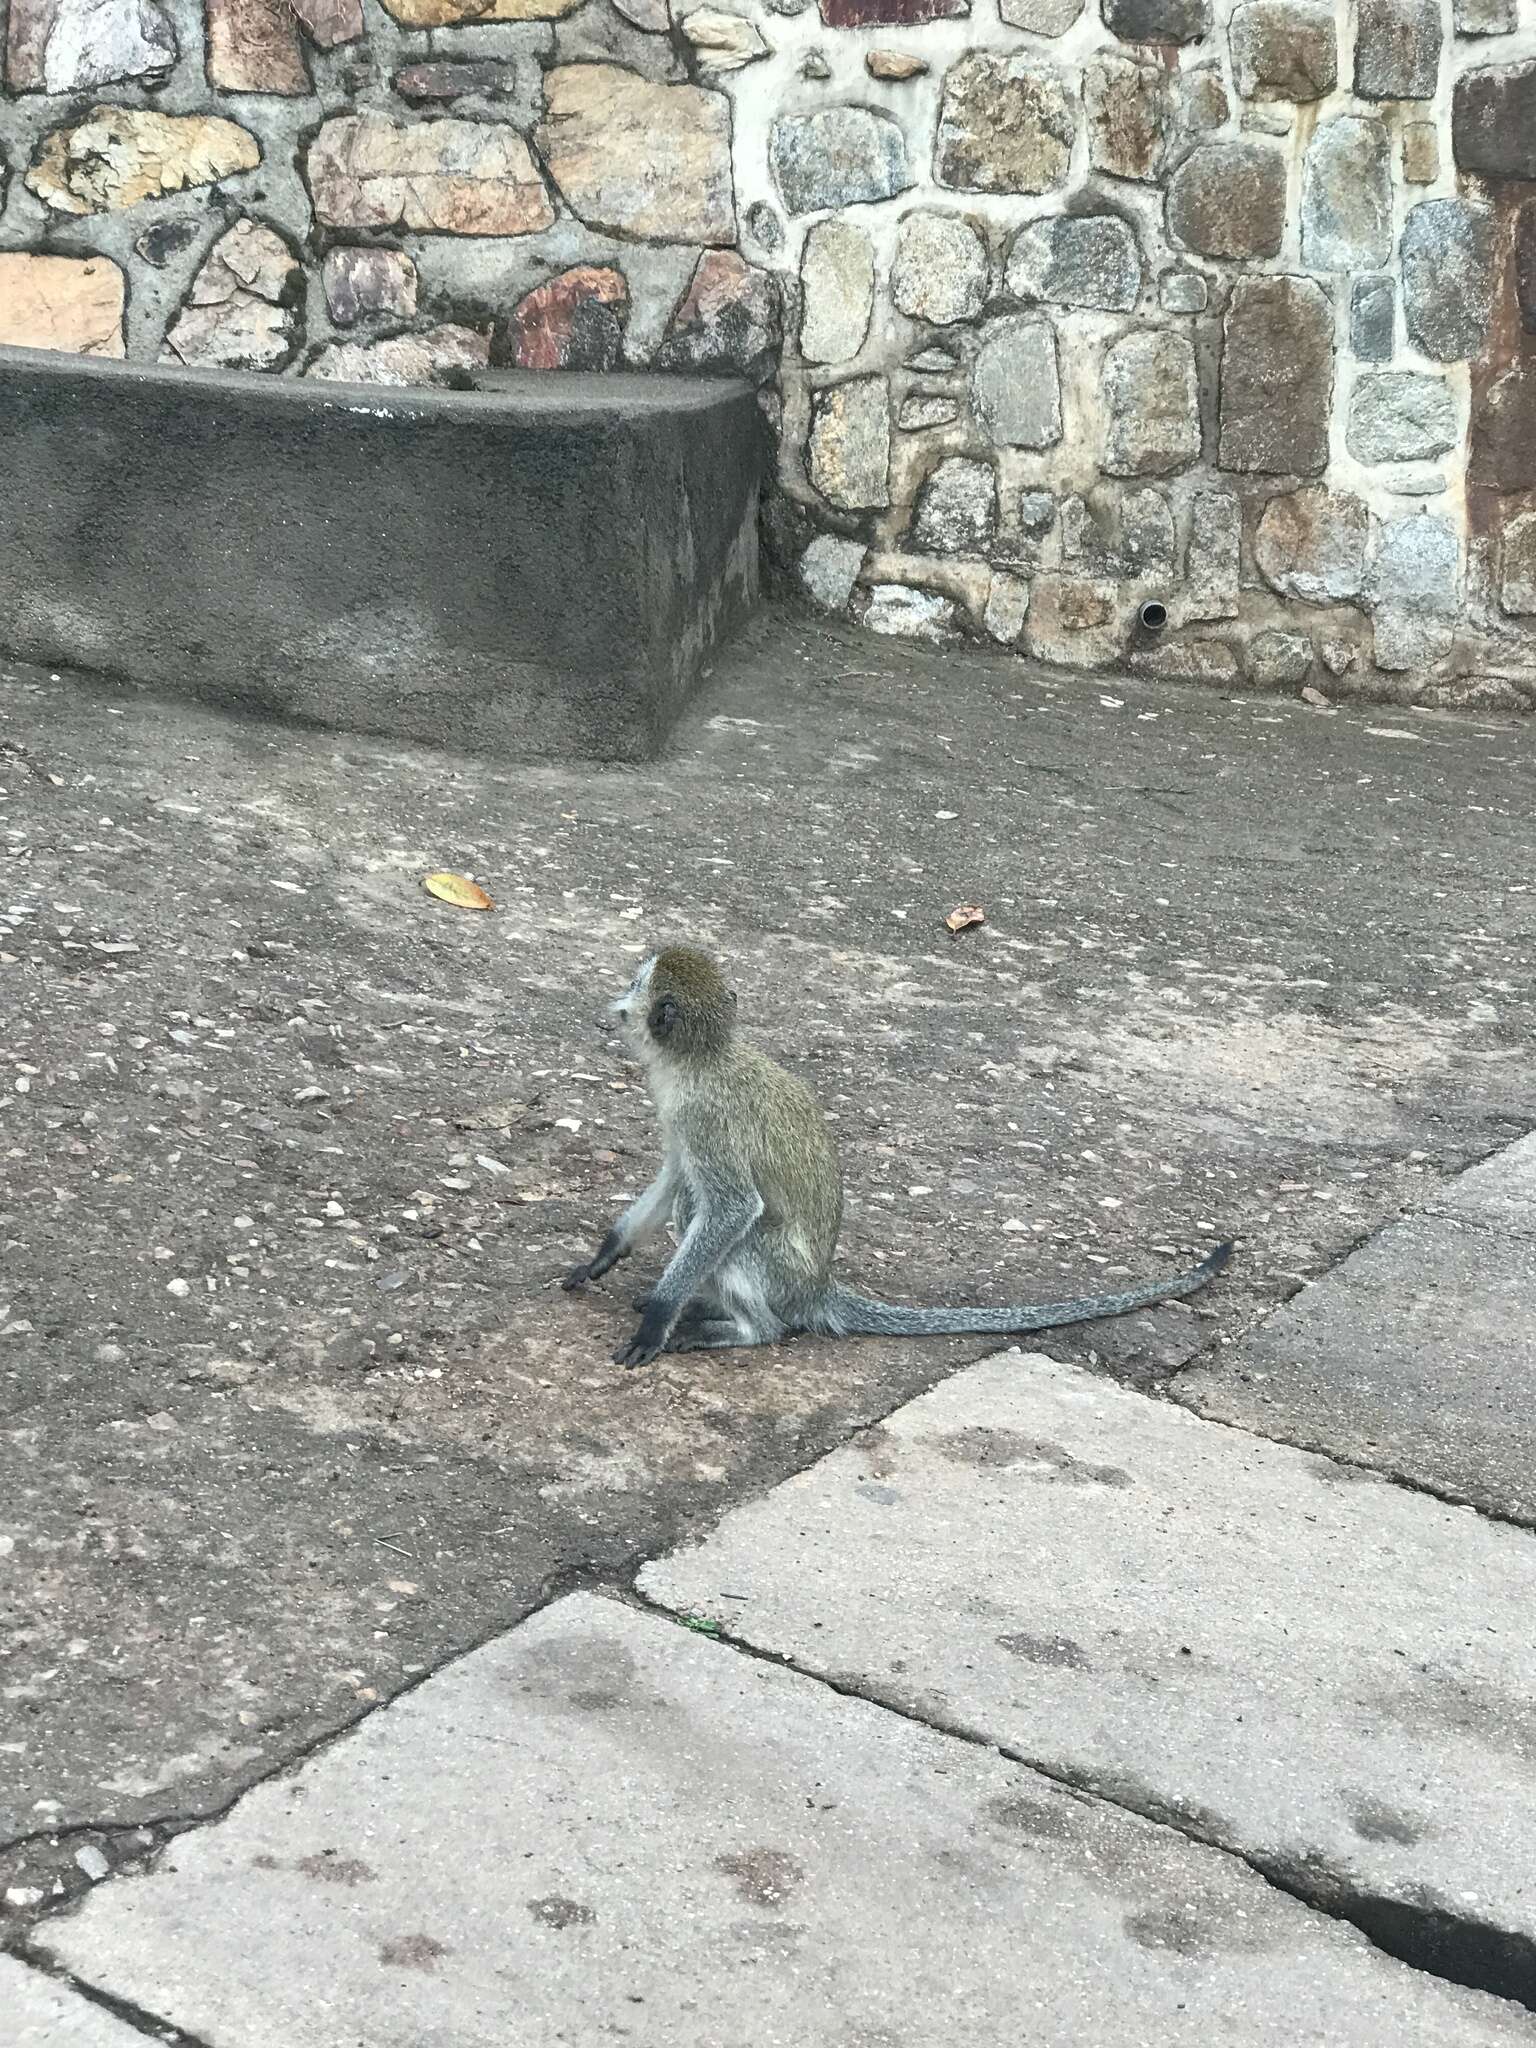 Image of Reddish-green Vervet Monkey